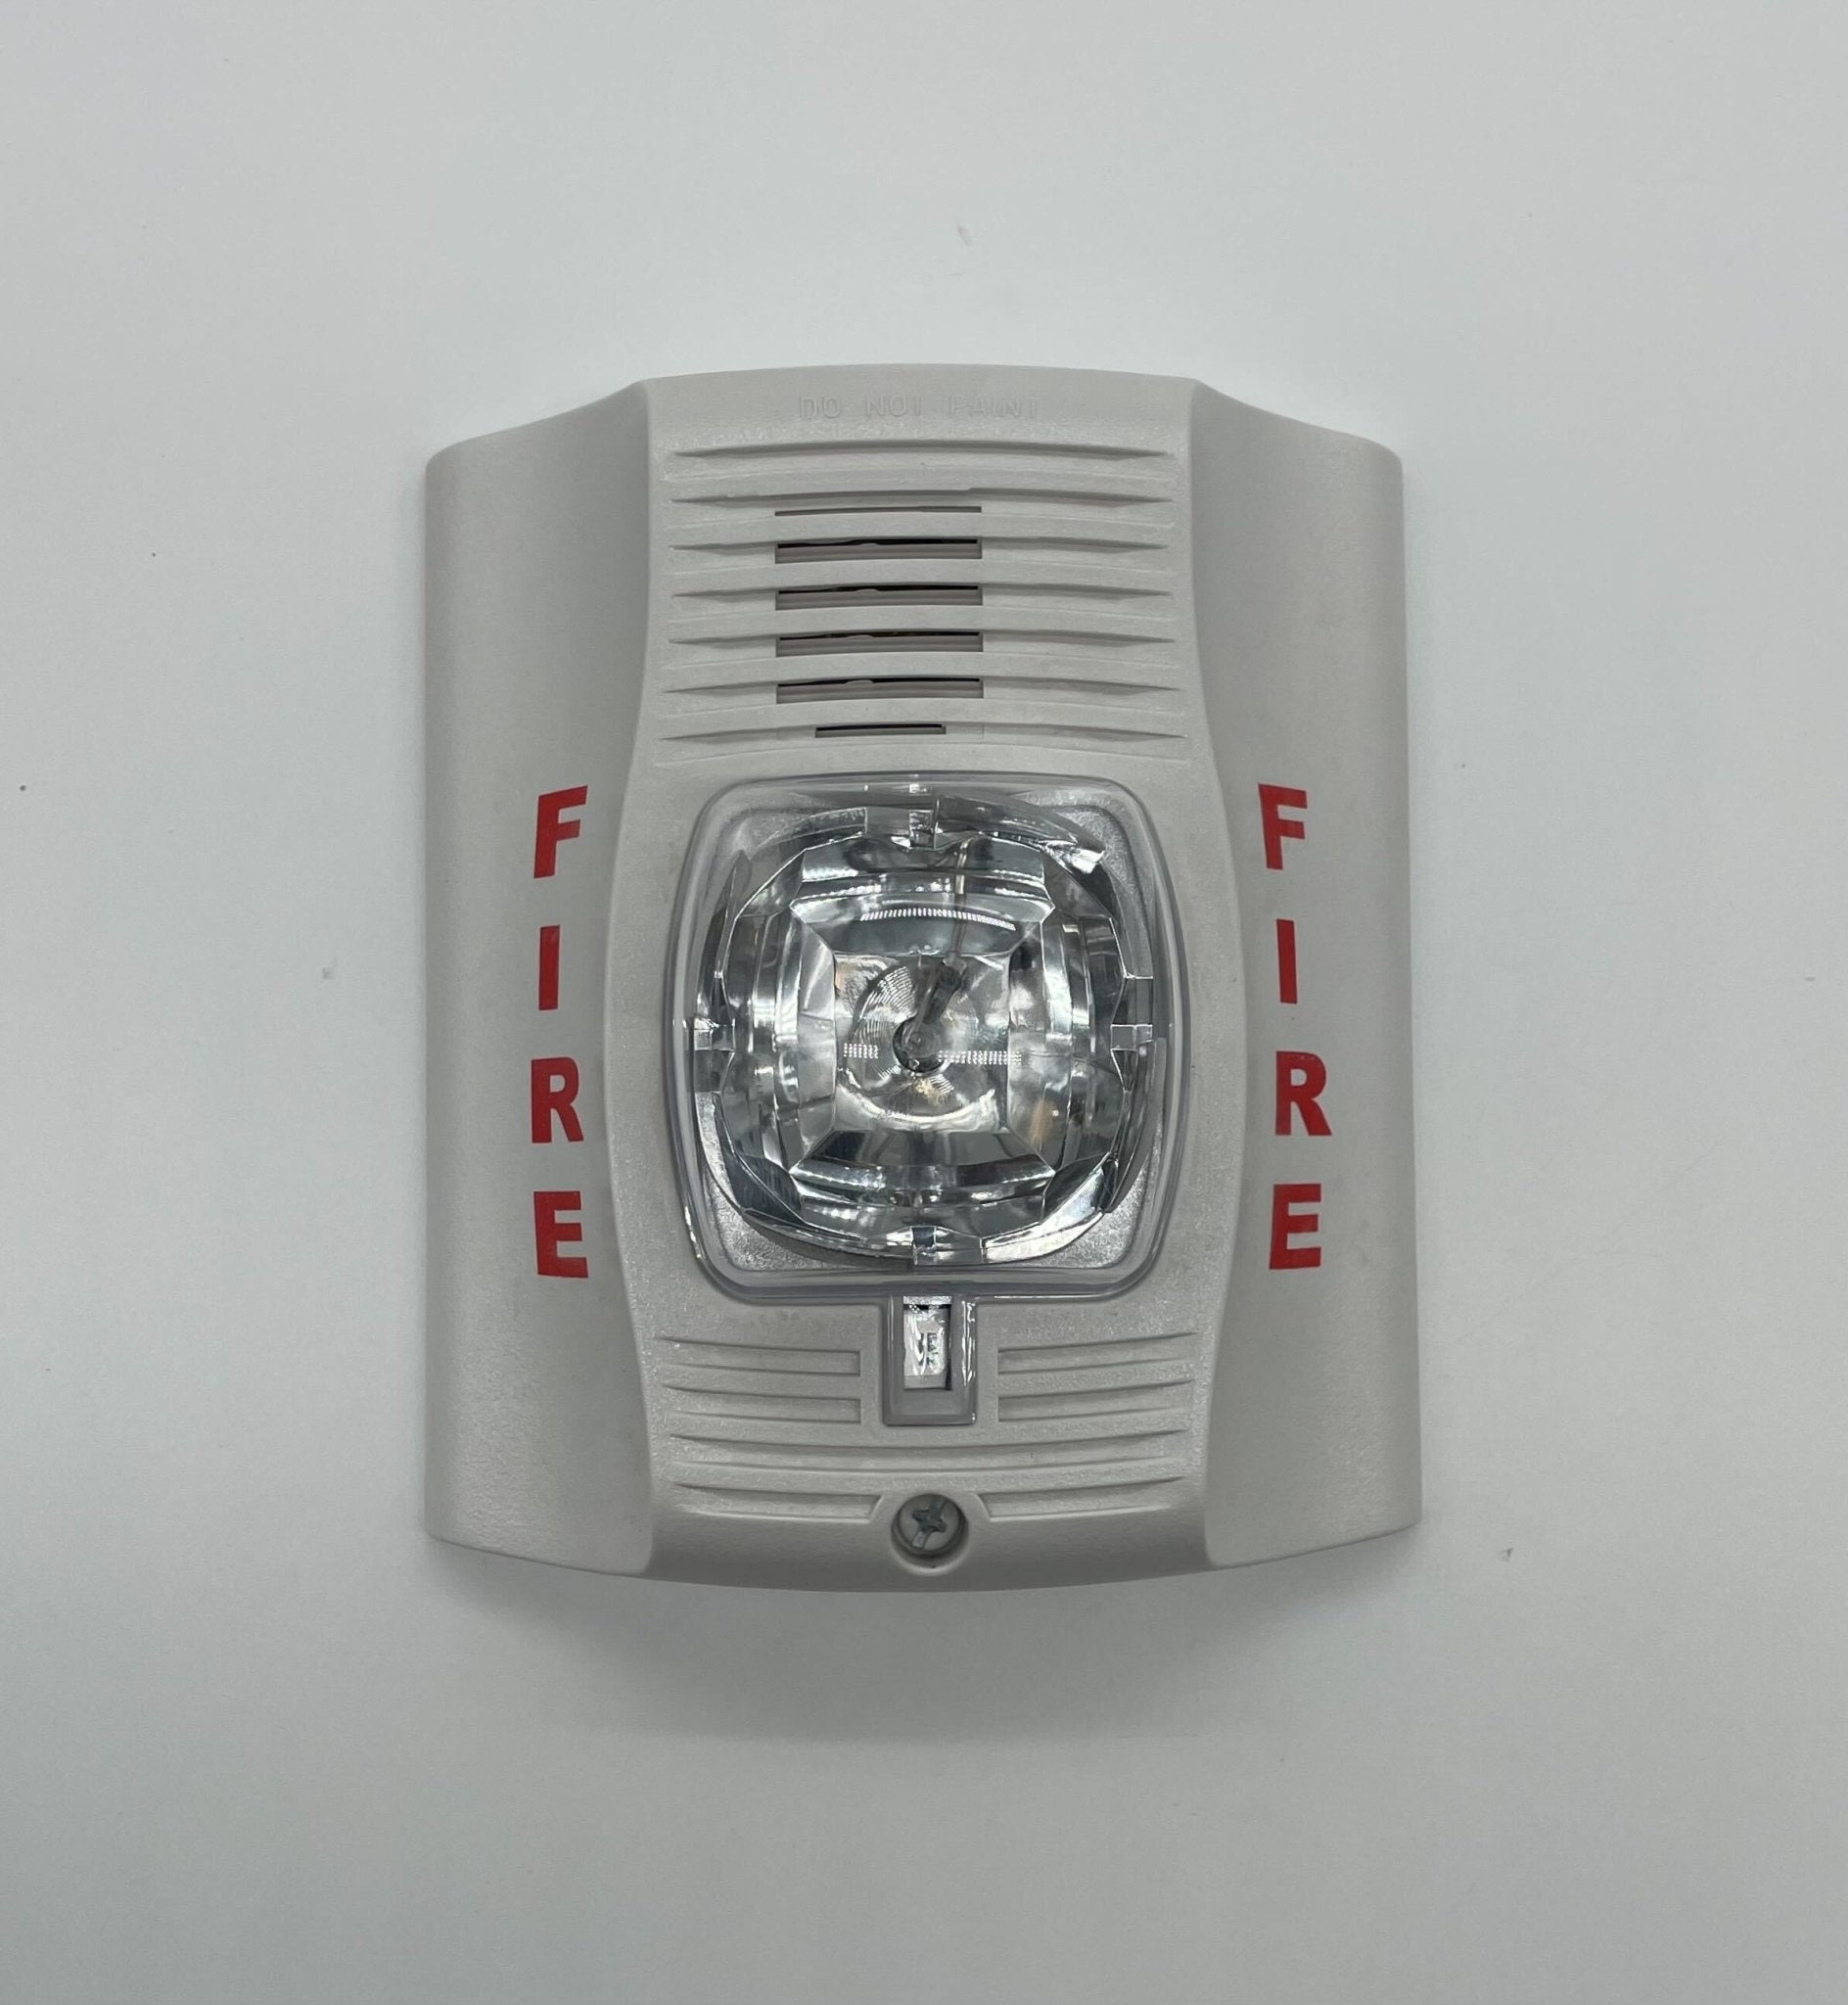 System Sensor P2W - The Fire Alarm Supplier